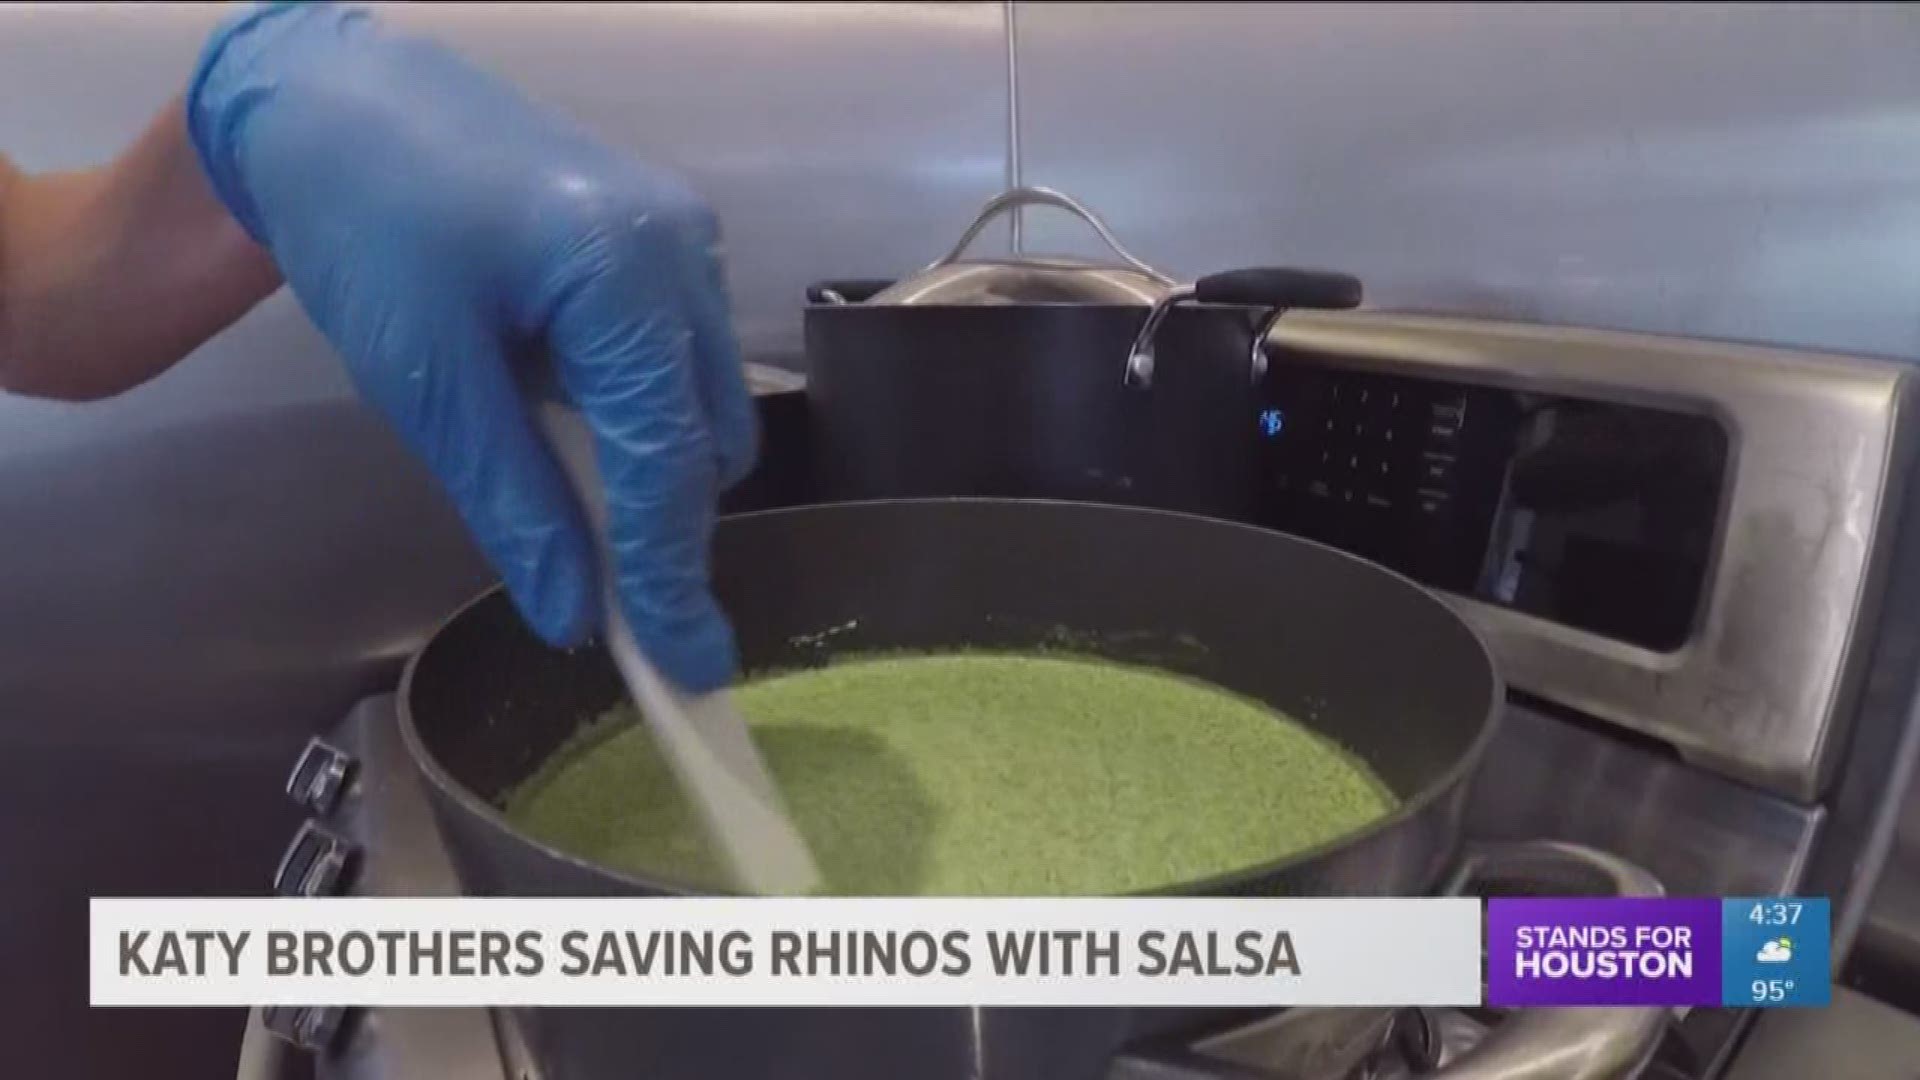 Three Katy brothers and their mom are helping save rhinos through salsa.